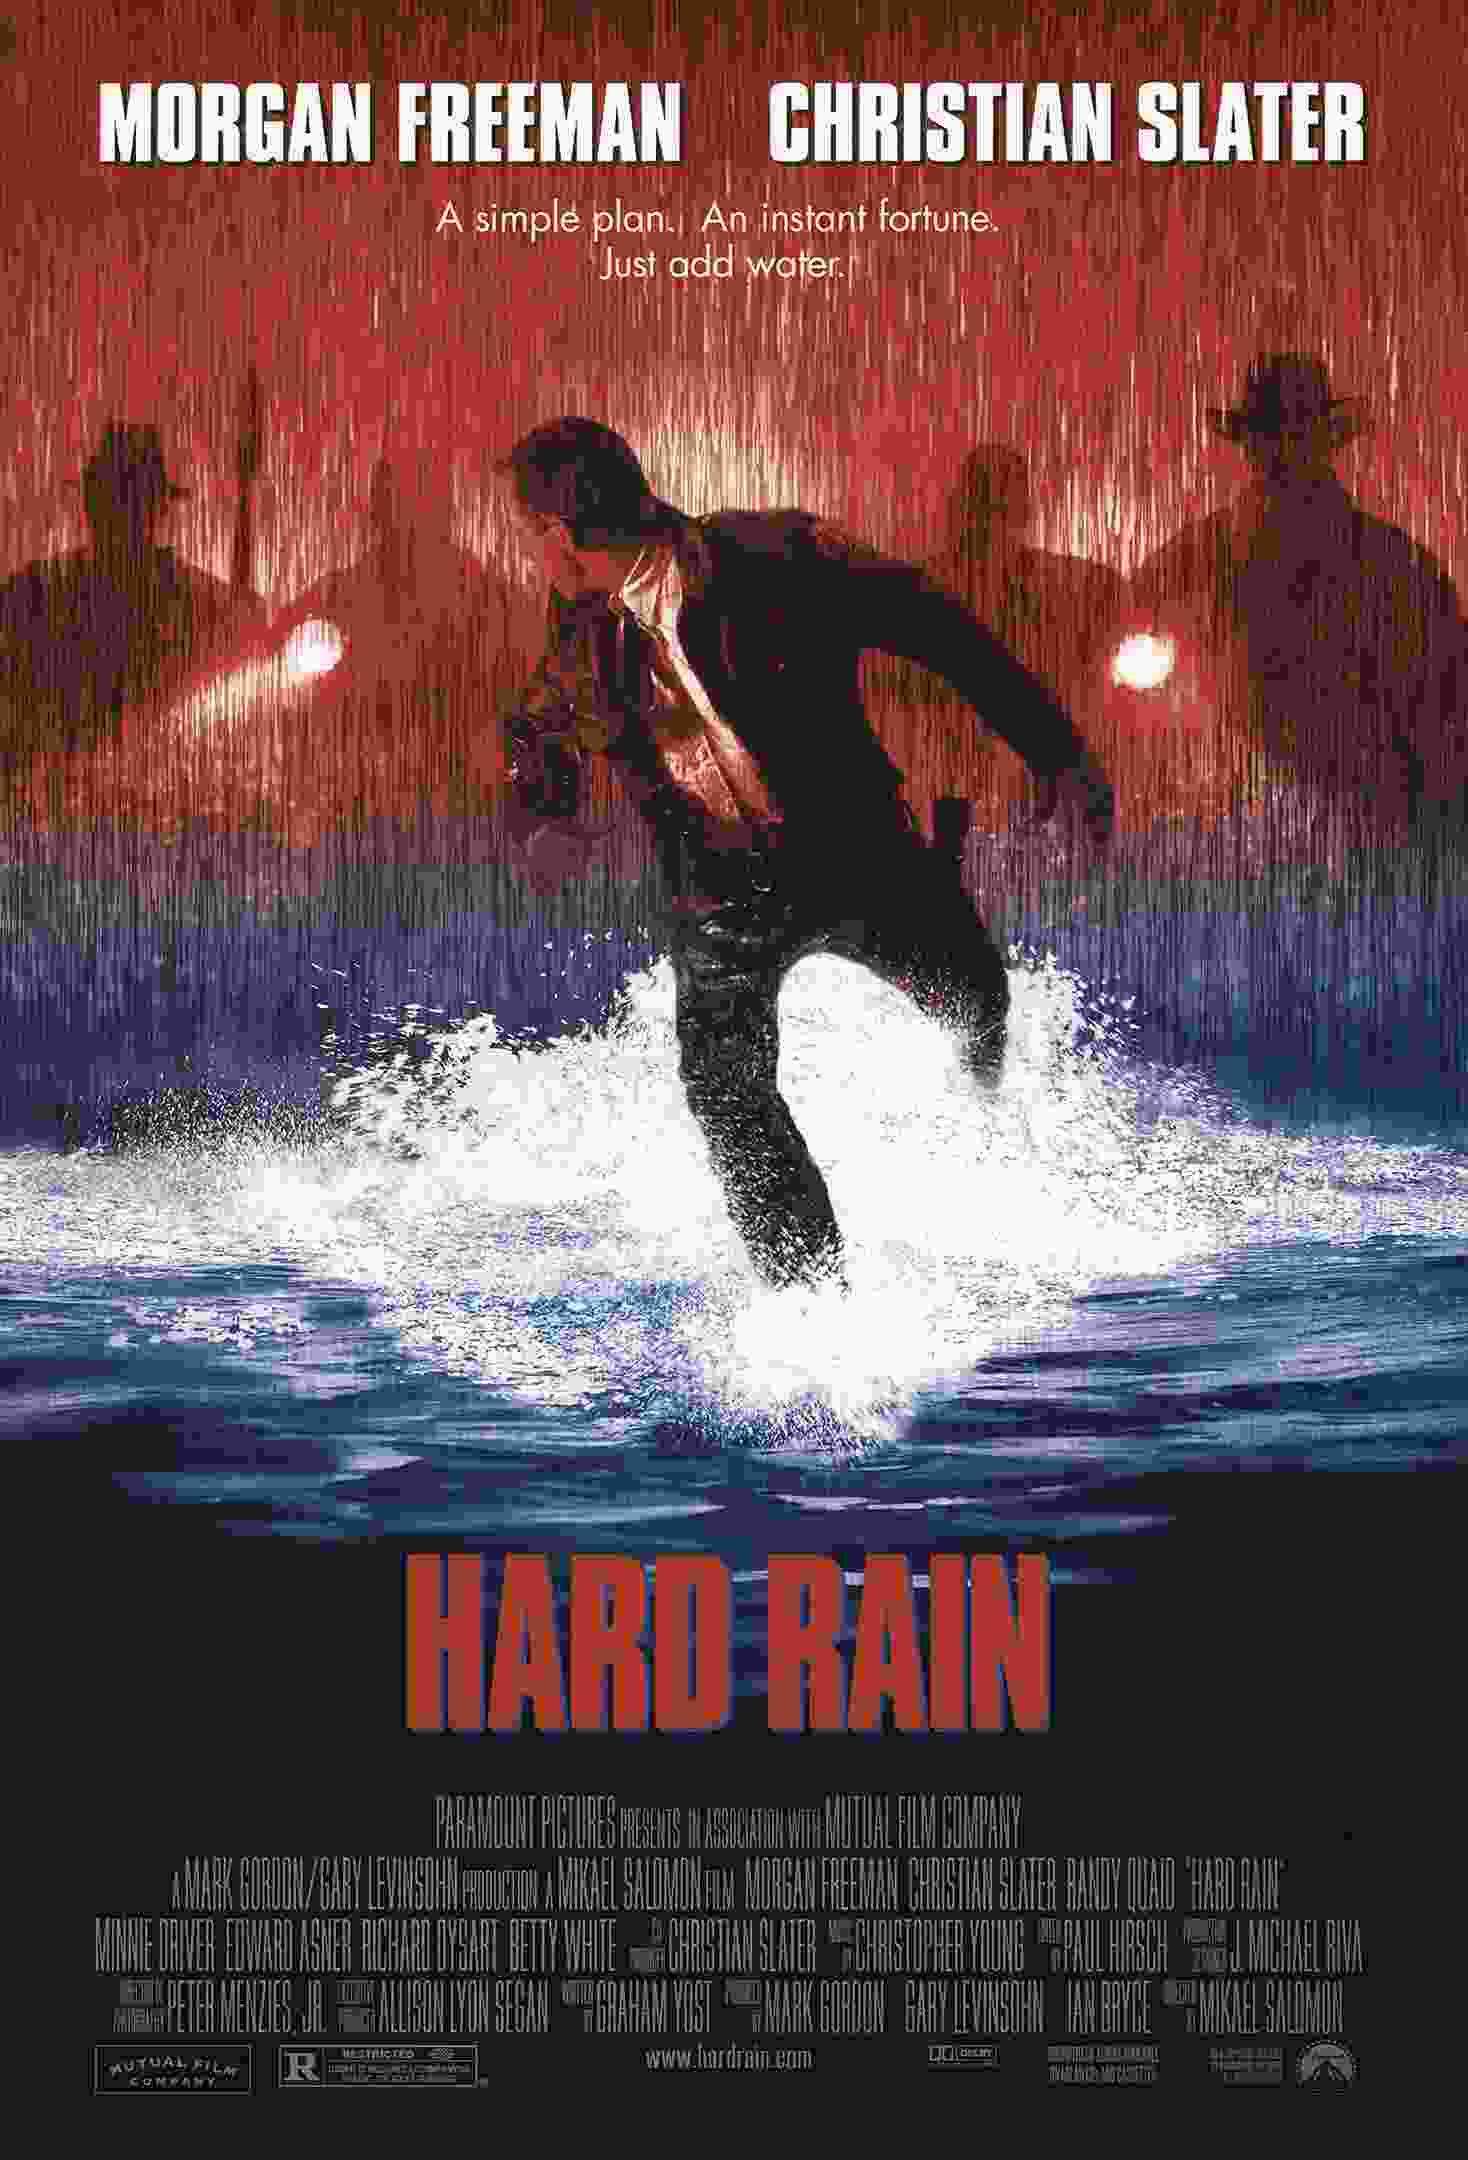 Hard Rain (1998) vj Junior Morgan Freeman